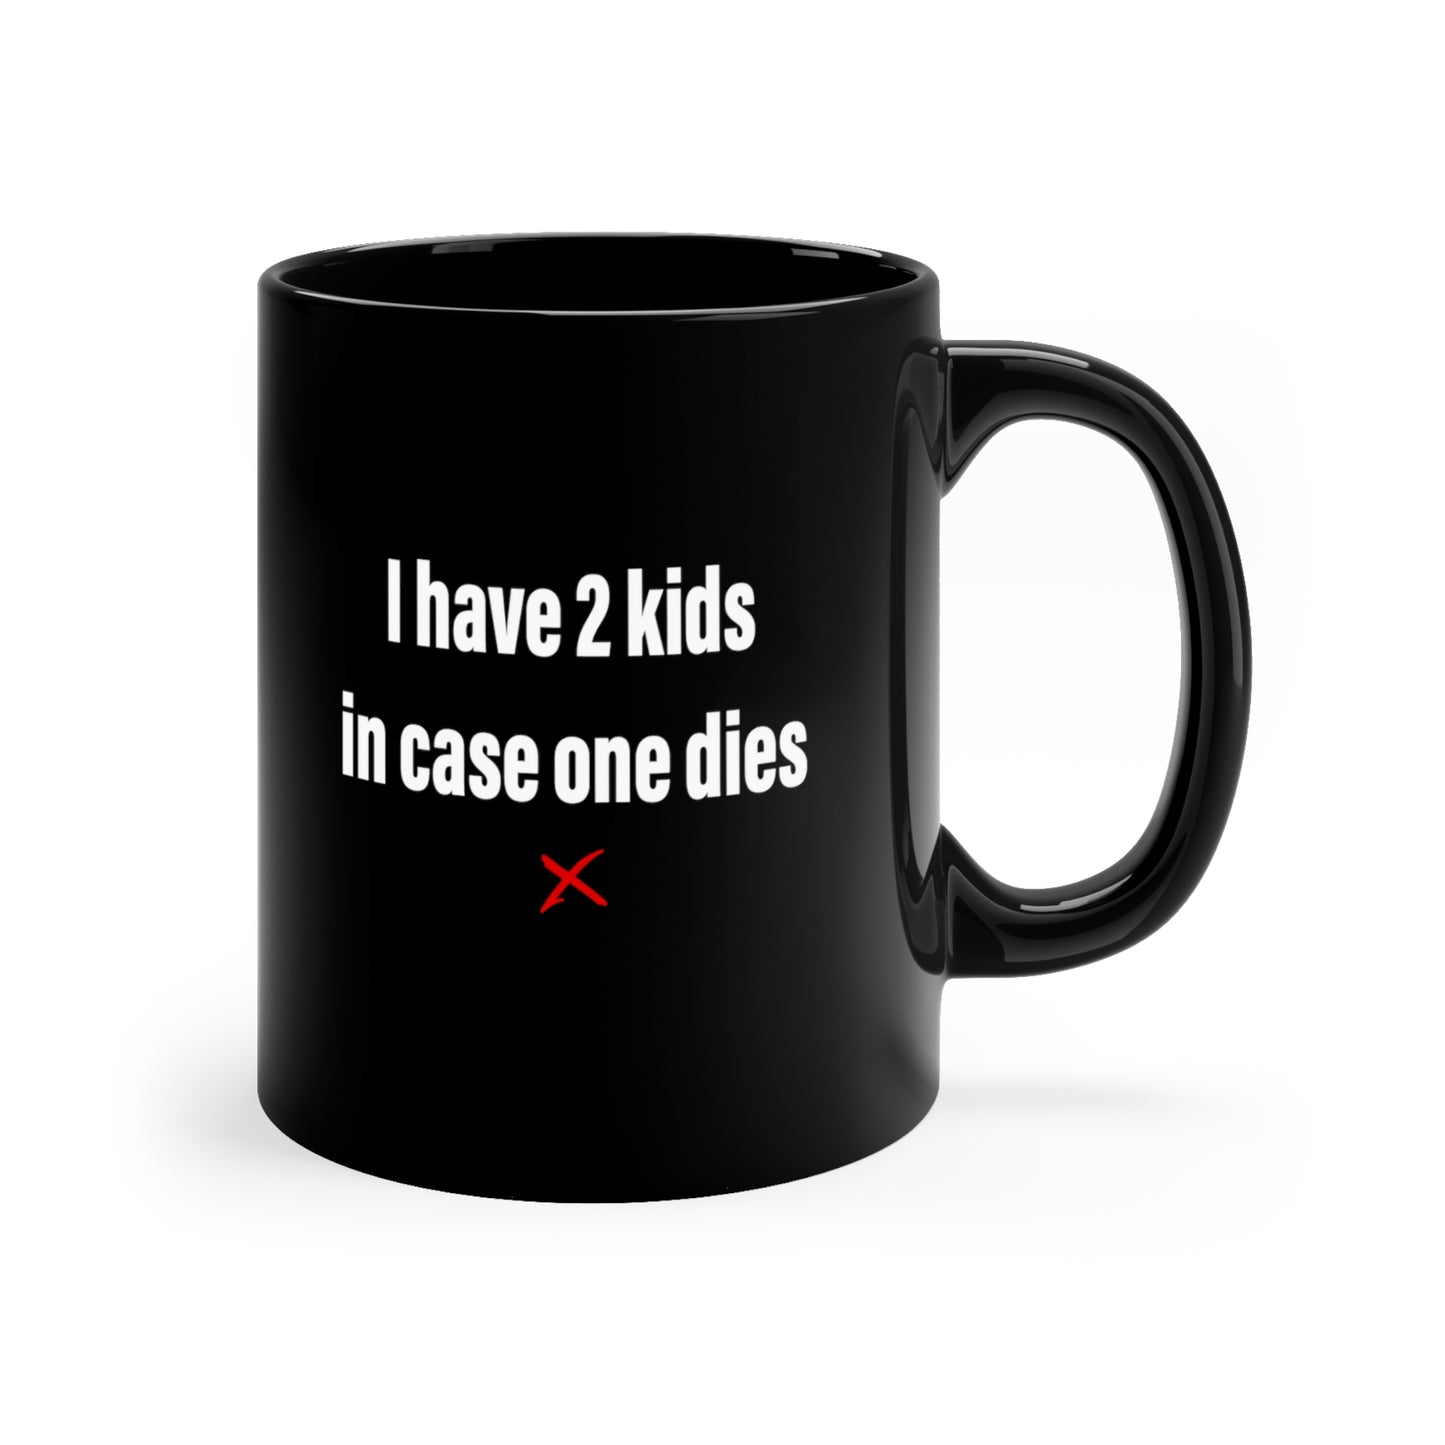 I have 2 kids in case one dies - Mug